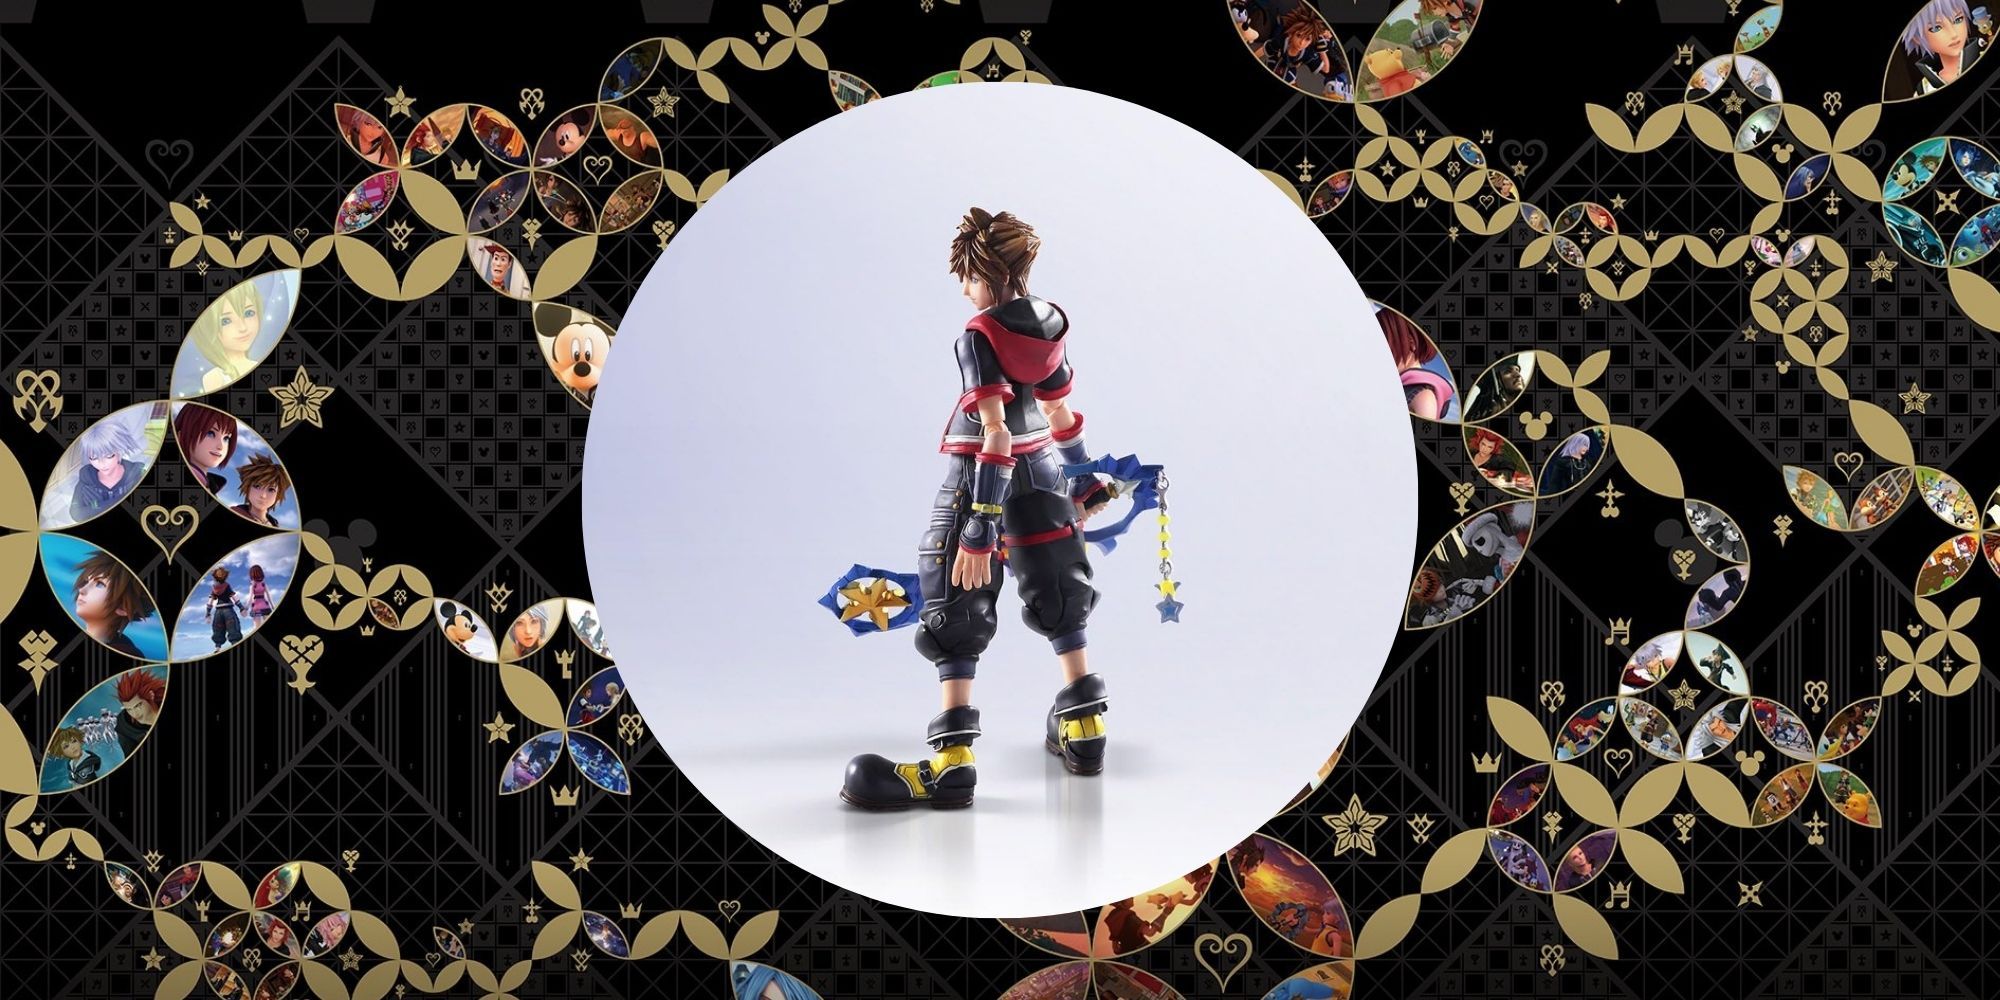 Sora Kingdom Hearts 3 Bring Arts figure imposed over Kingdom Hearts anniversary official artwork